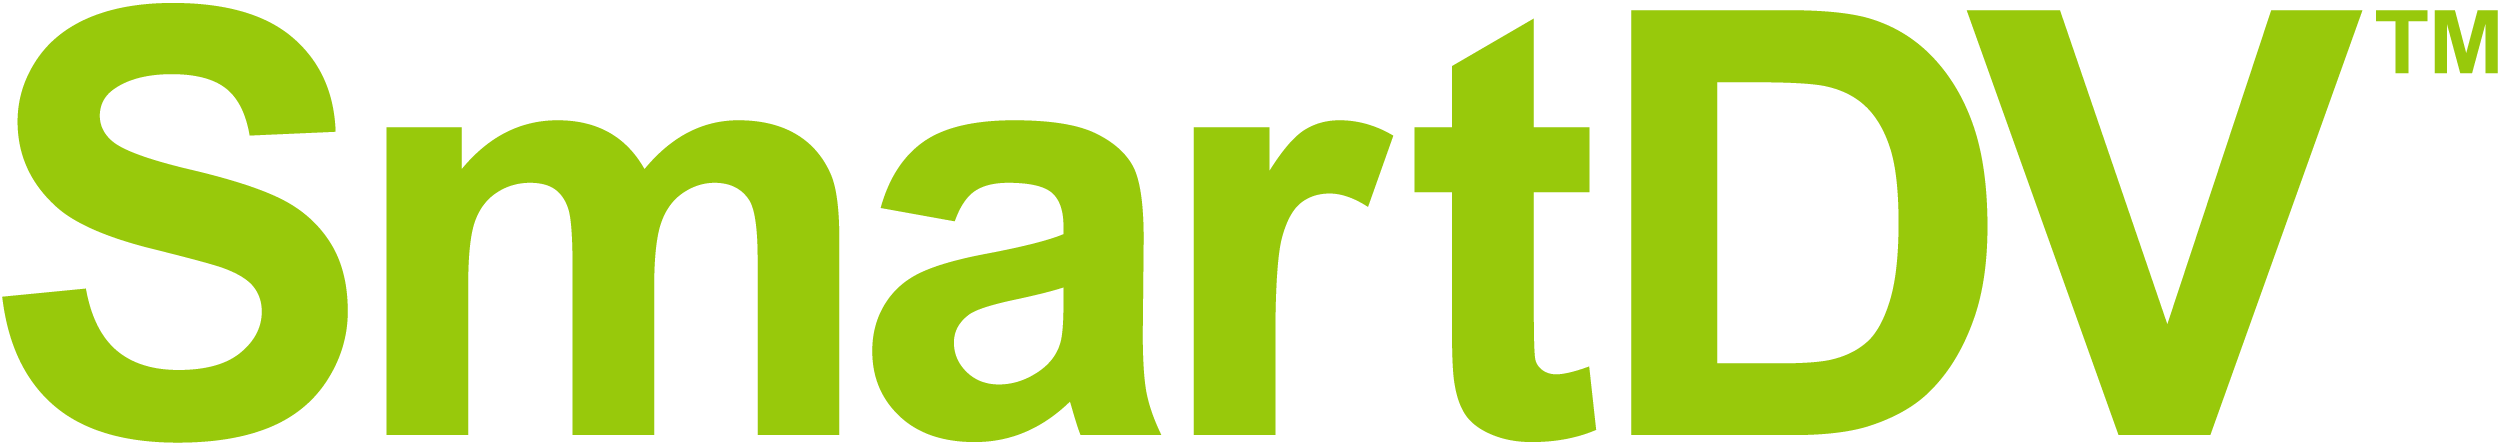 SmartDV Logo Green 2500px.png